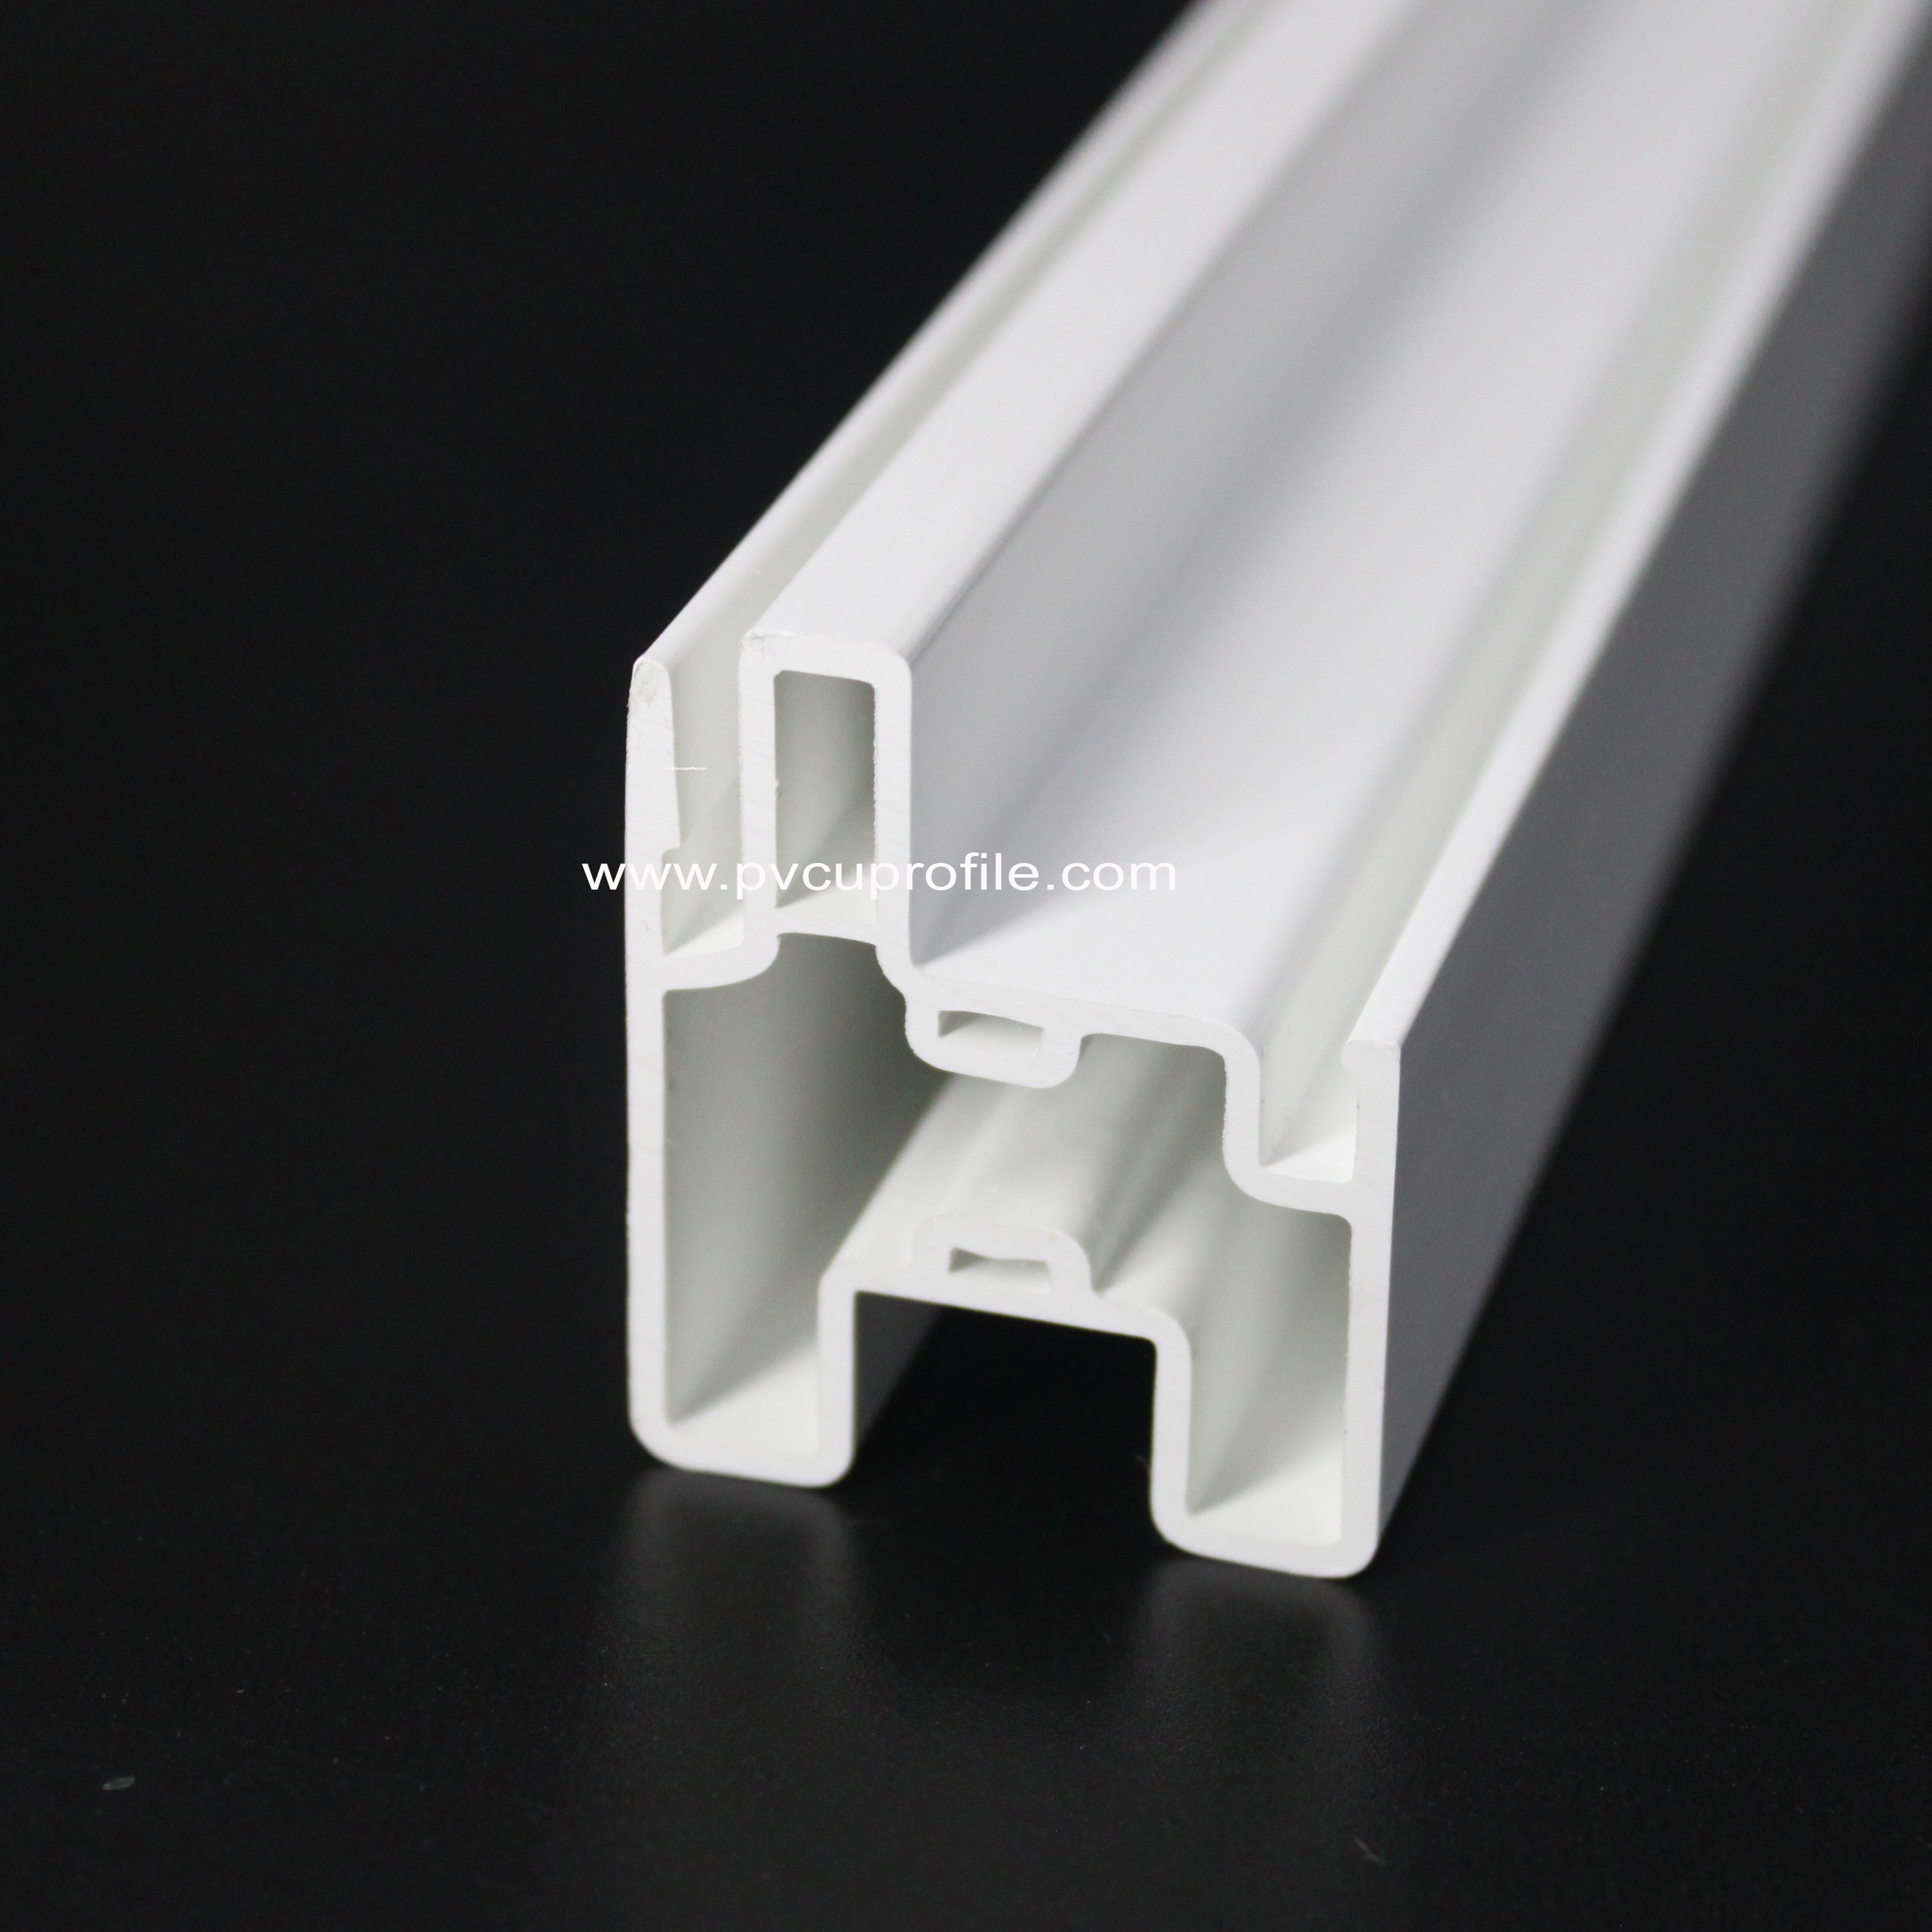 Traslapo Movil PVC-Profile Americano Linea PVC